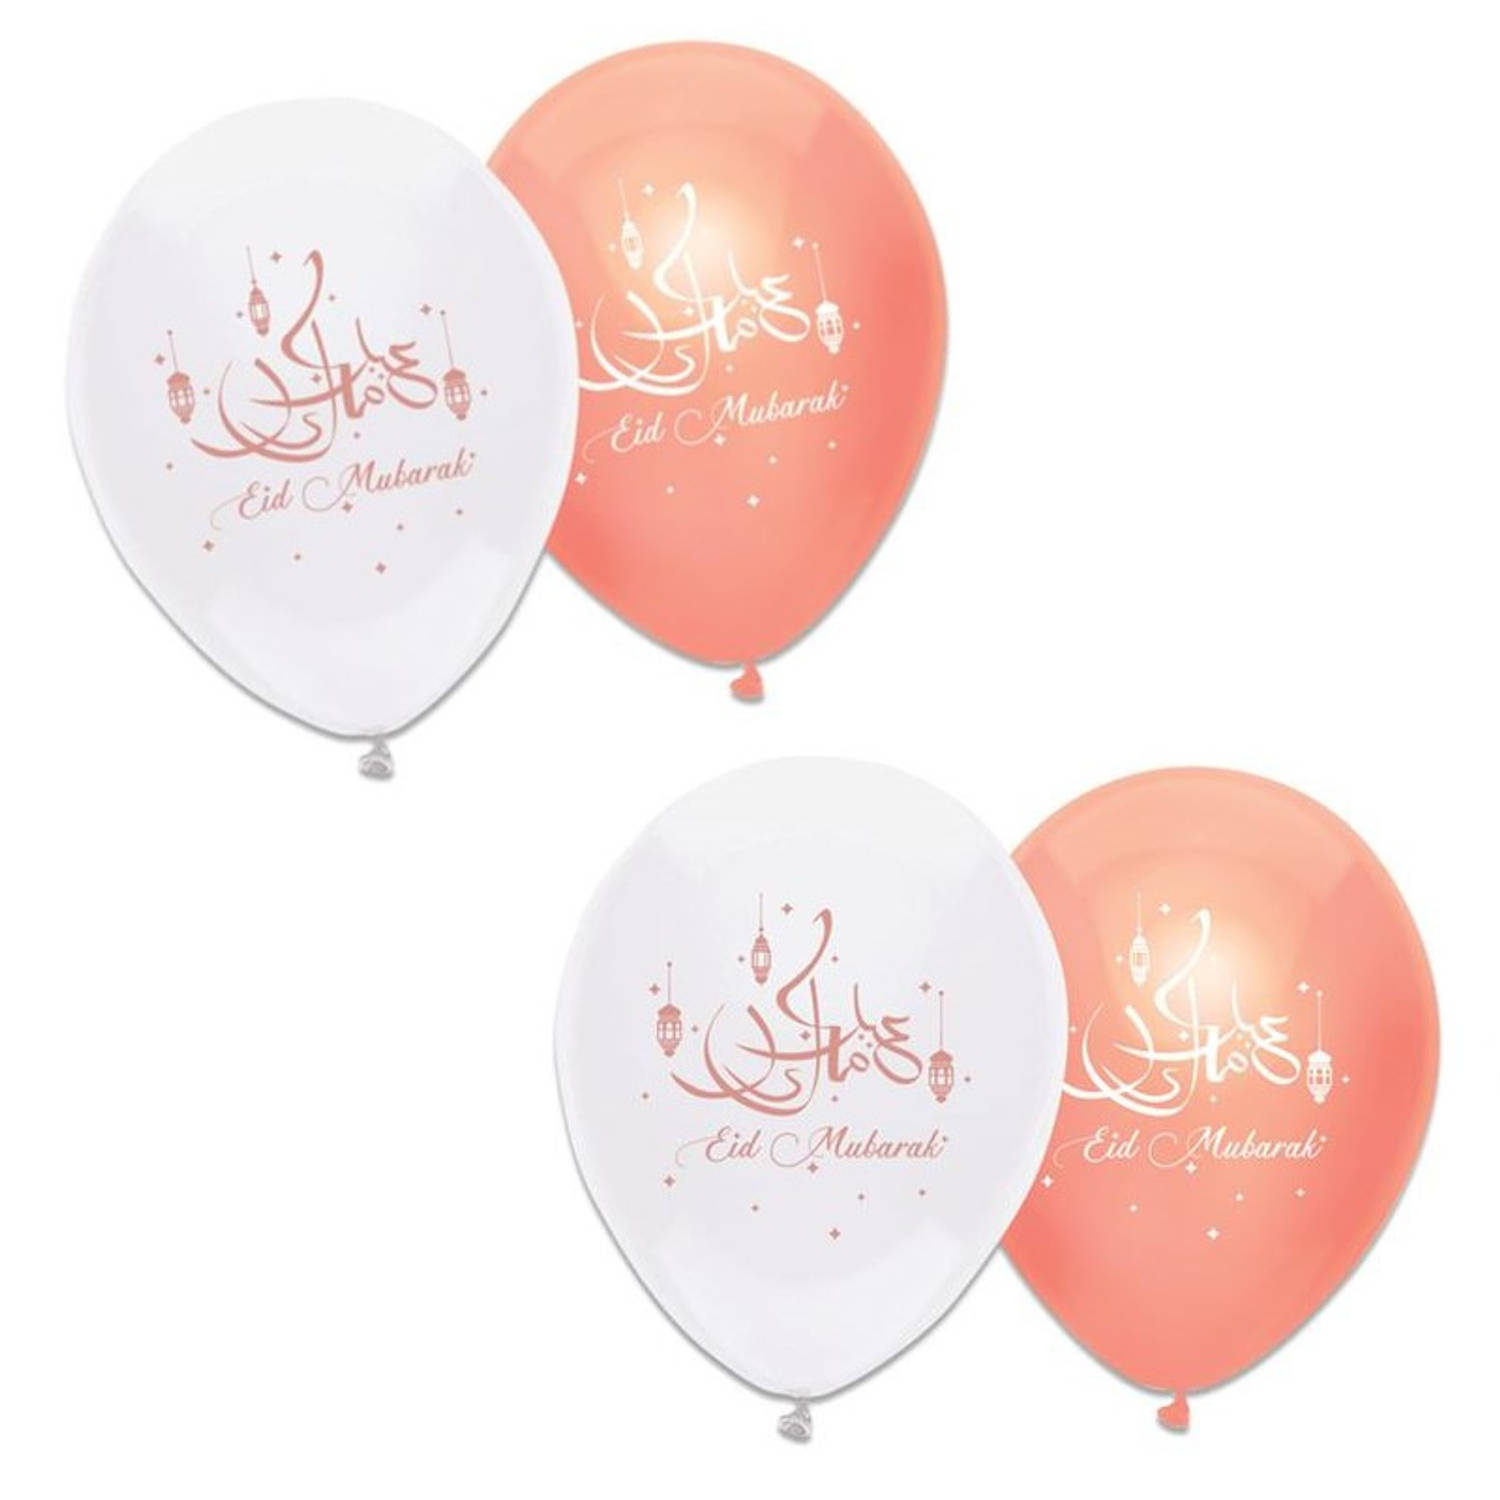 12x stuks Suikerfeest/offerfeest versiering metallic ballonnen wit/roze 30 cm - Ballonnen